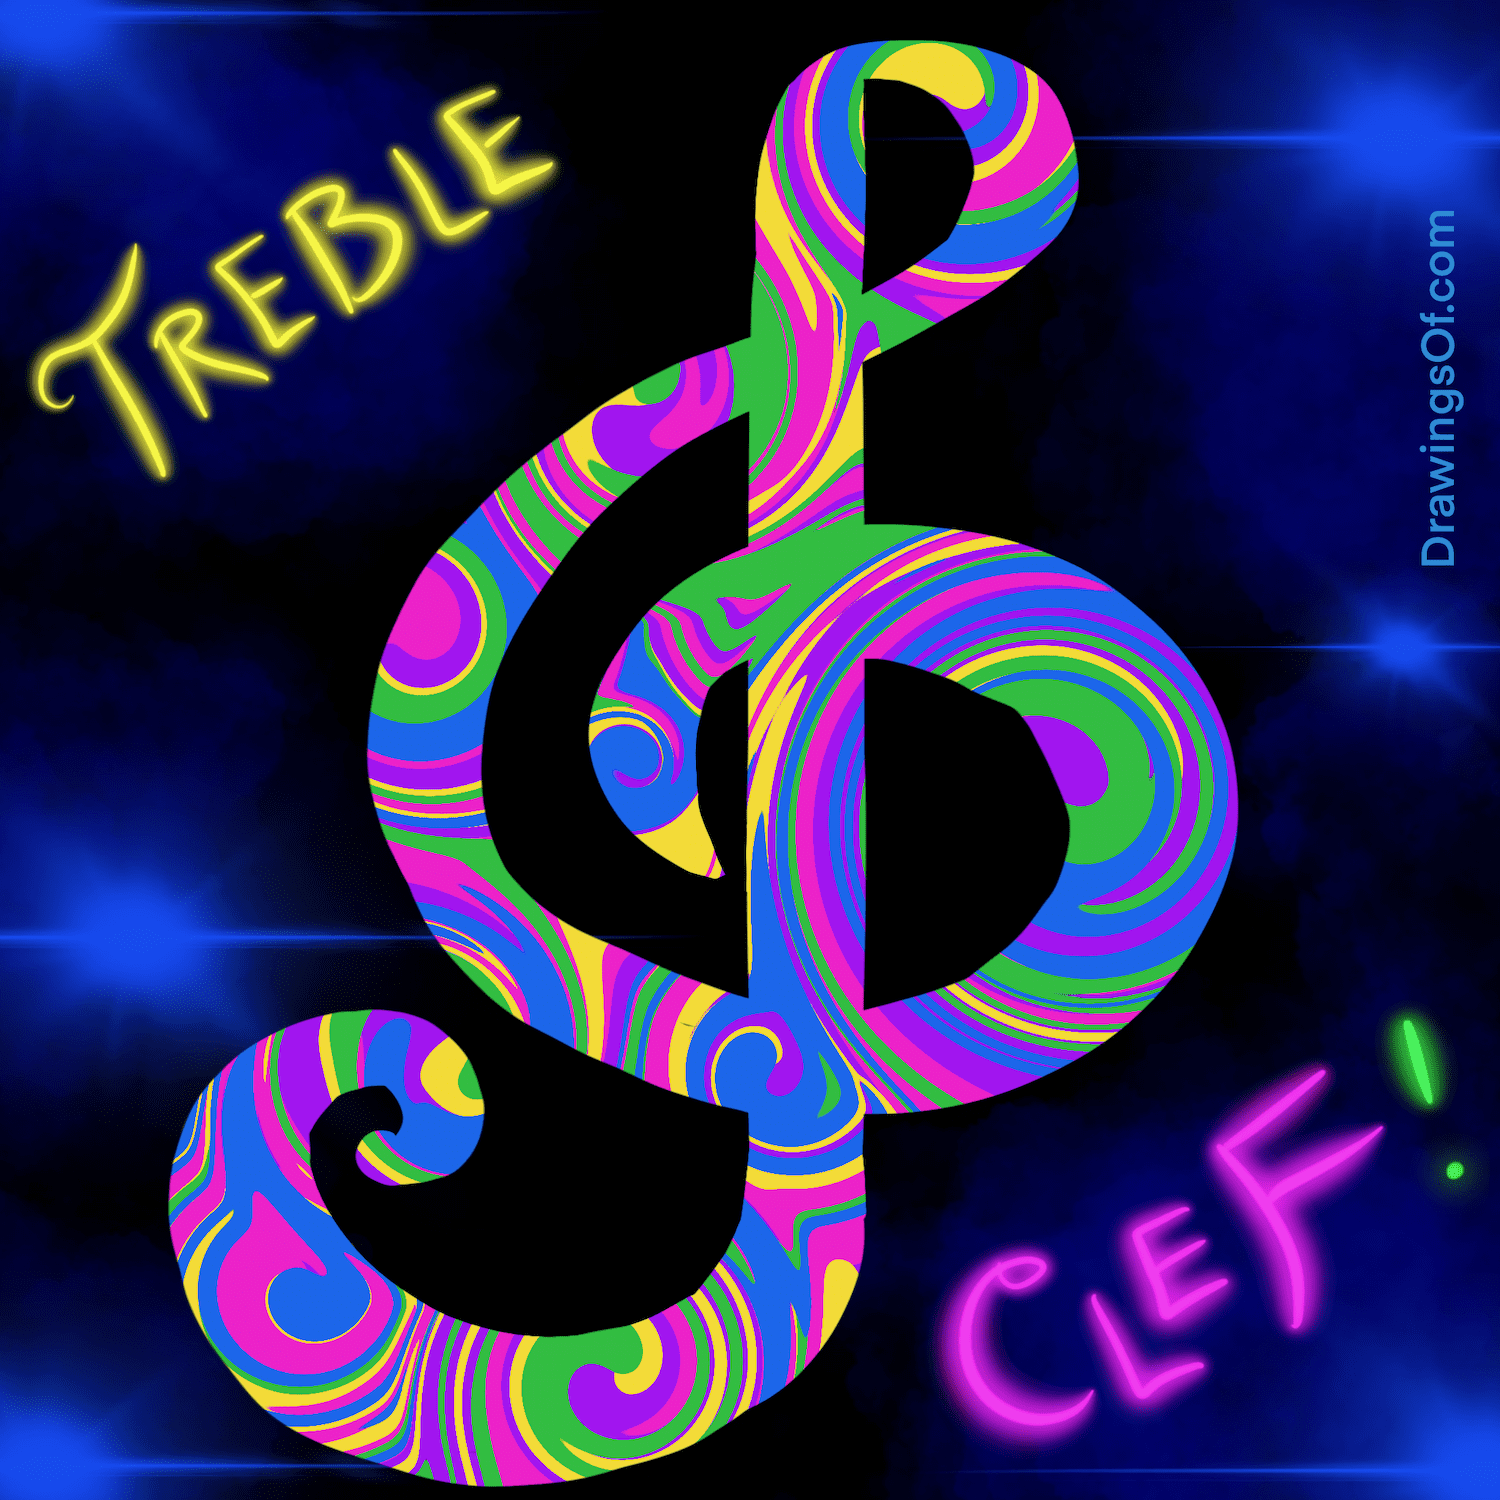 Treble clef drawing